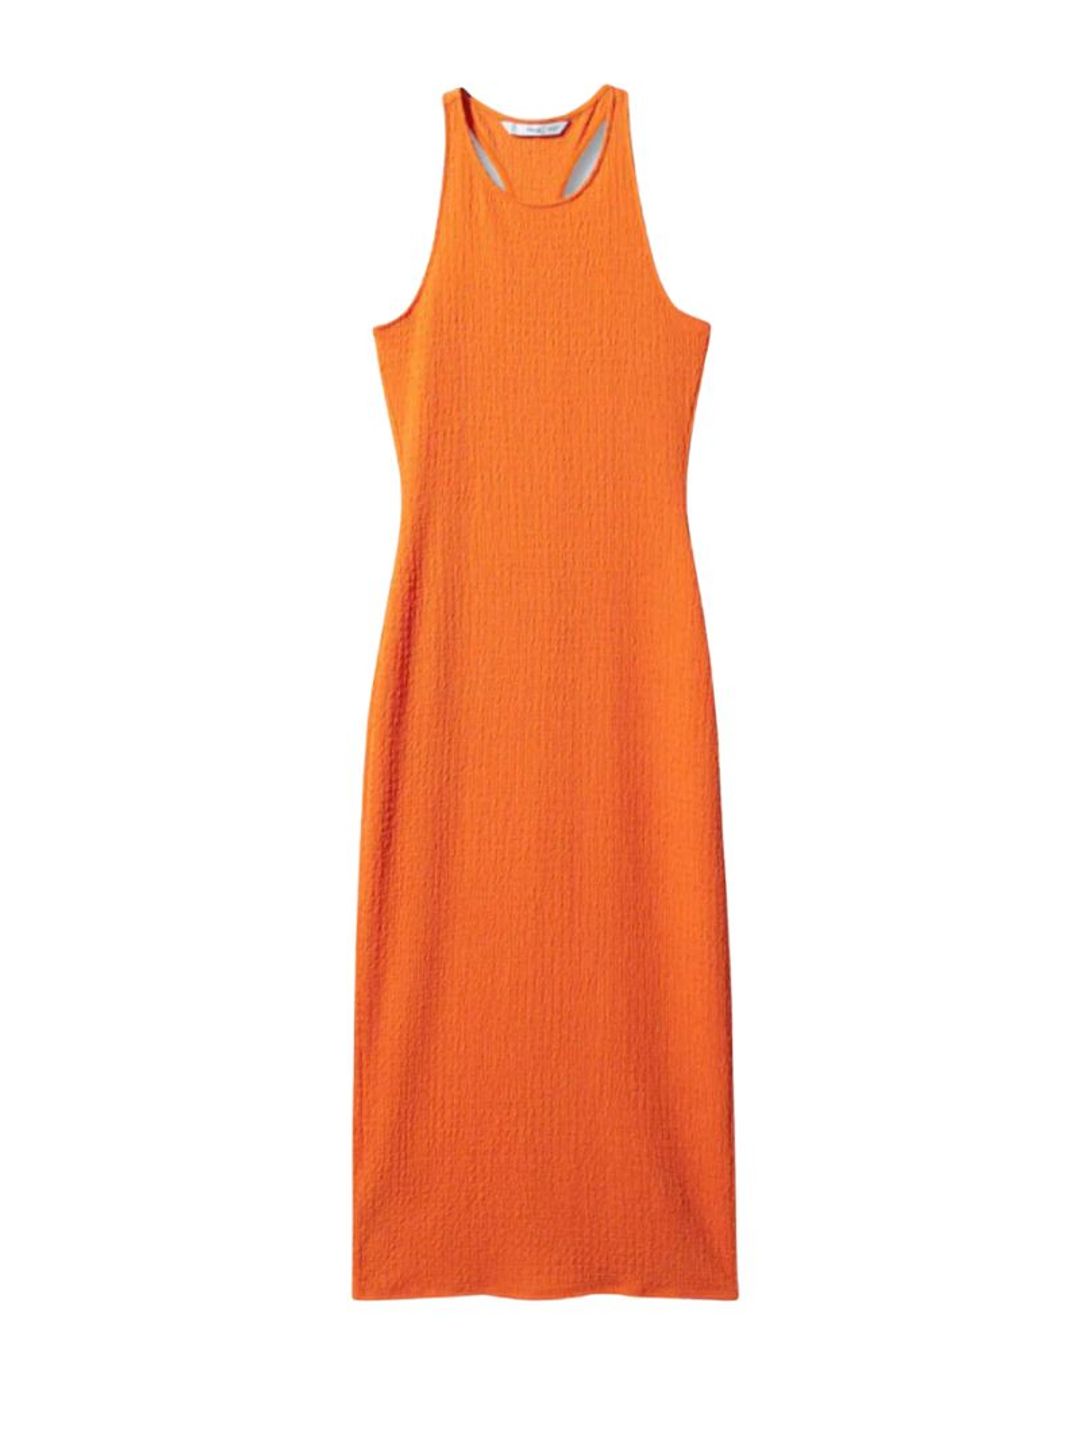 Orange tank top dress